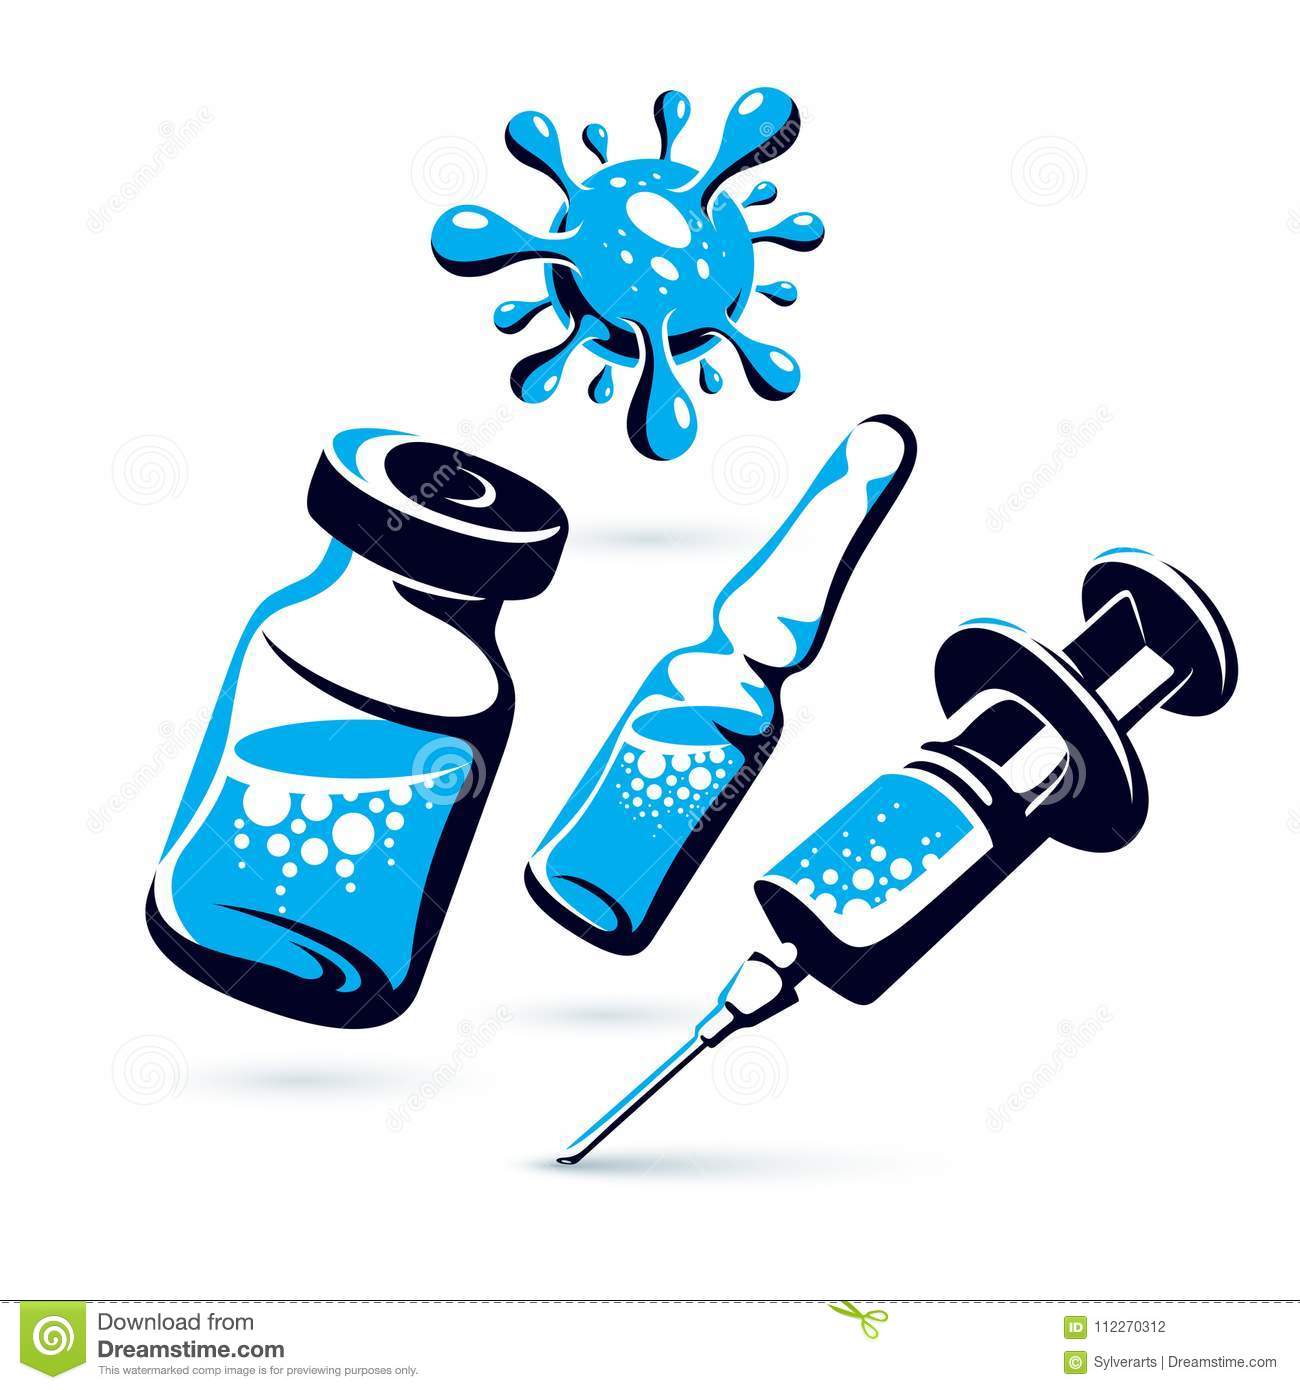 vaccine clipart vial